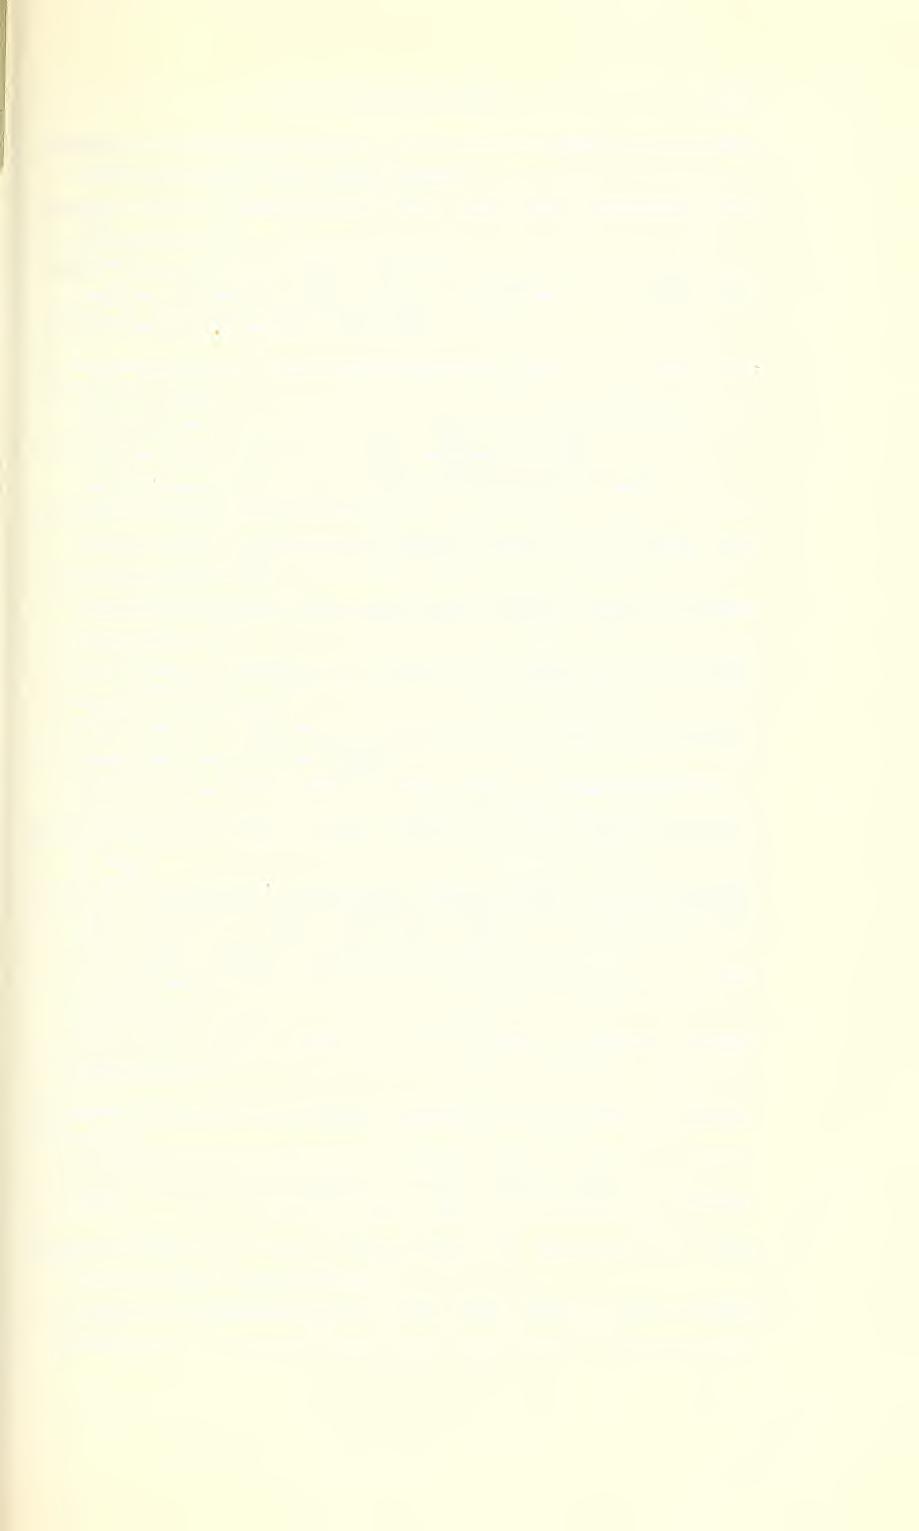 Ent. Arb. Mus. Frey 14, 1963 159 Lagunas de Zempoala, Mex., (8 kms. al Nor.-Oeste), 11. III. 1962, Pinns Hartivegii, branch, Carr. Mexico - Tuxpan, K. 175, Hgo., 8. III. 1962, Pinus patula, trunk, Cuernavaca, Mex.